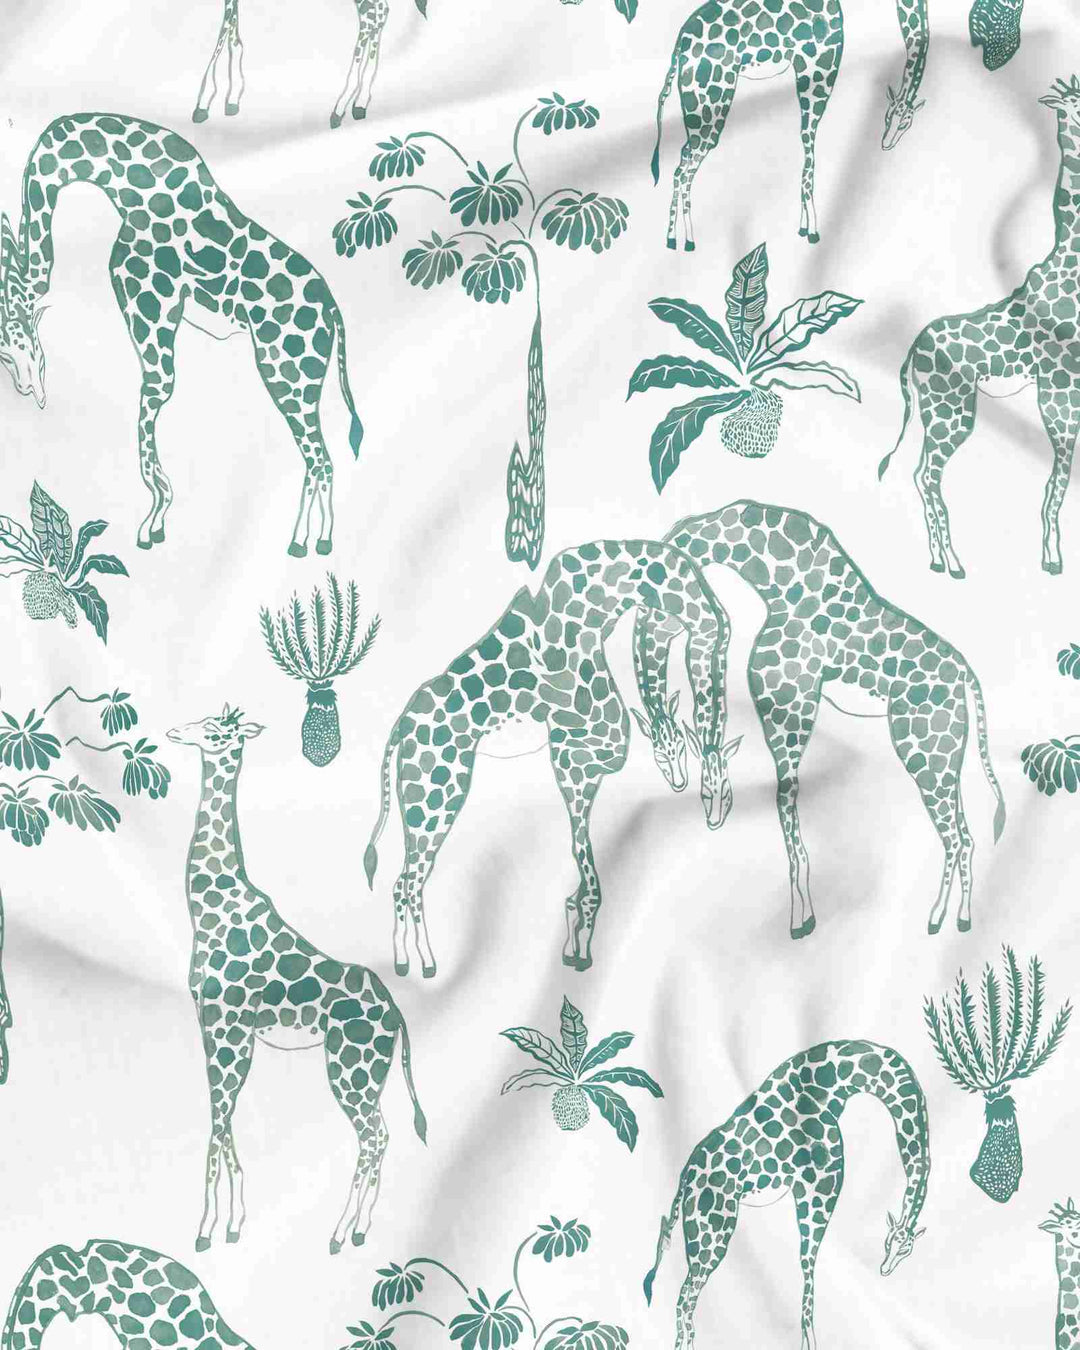 Mens long pyjamas set - Giraffes Green